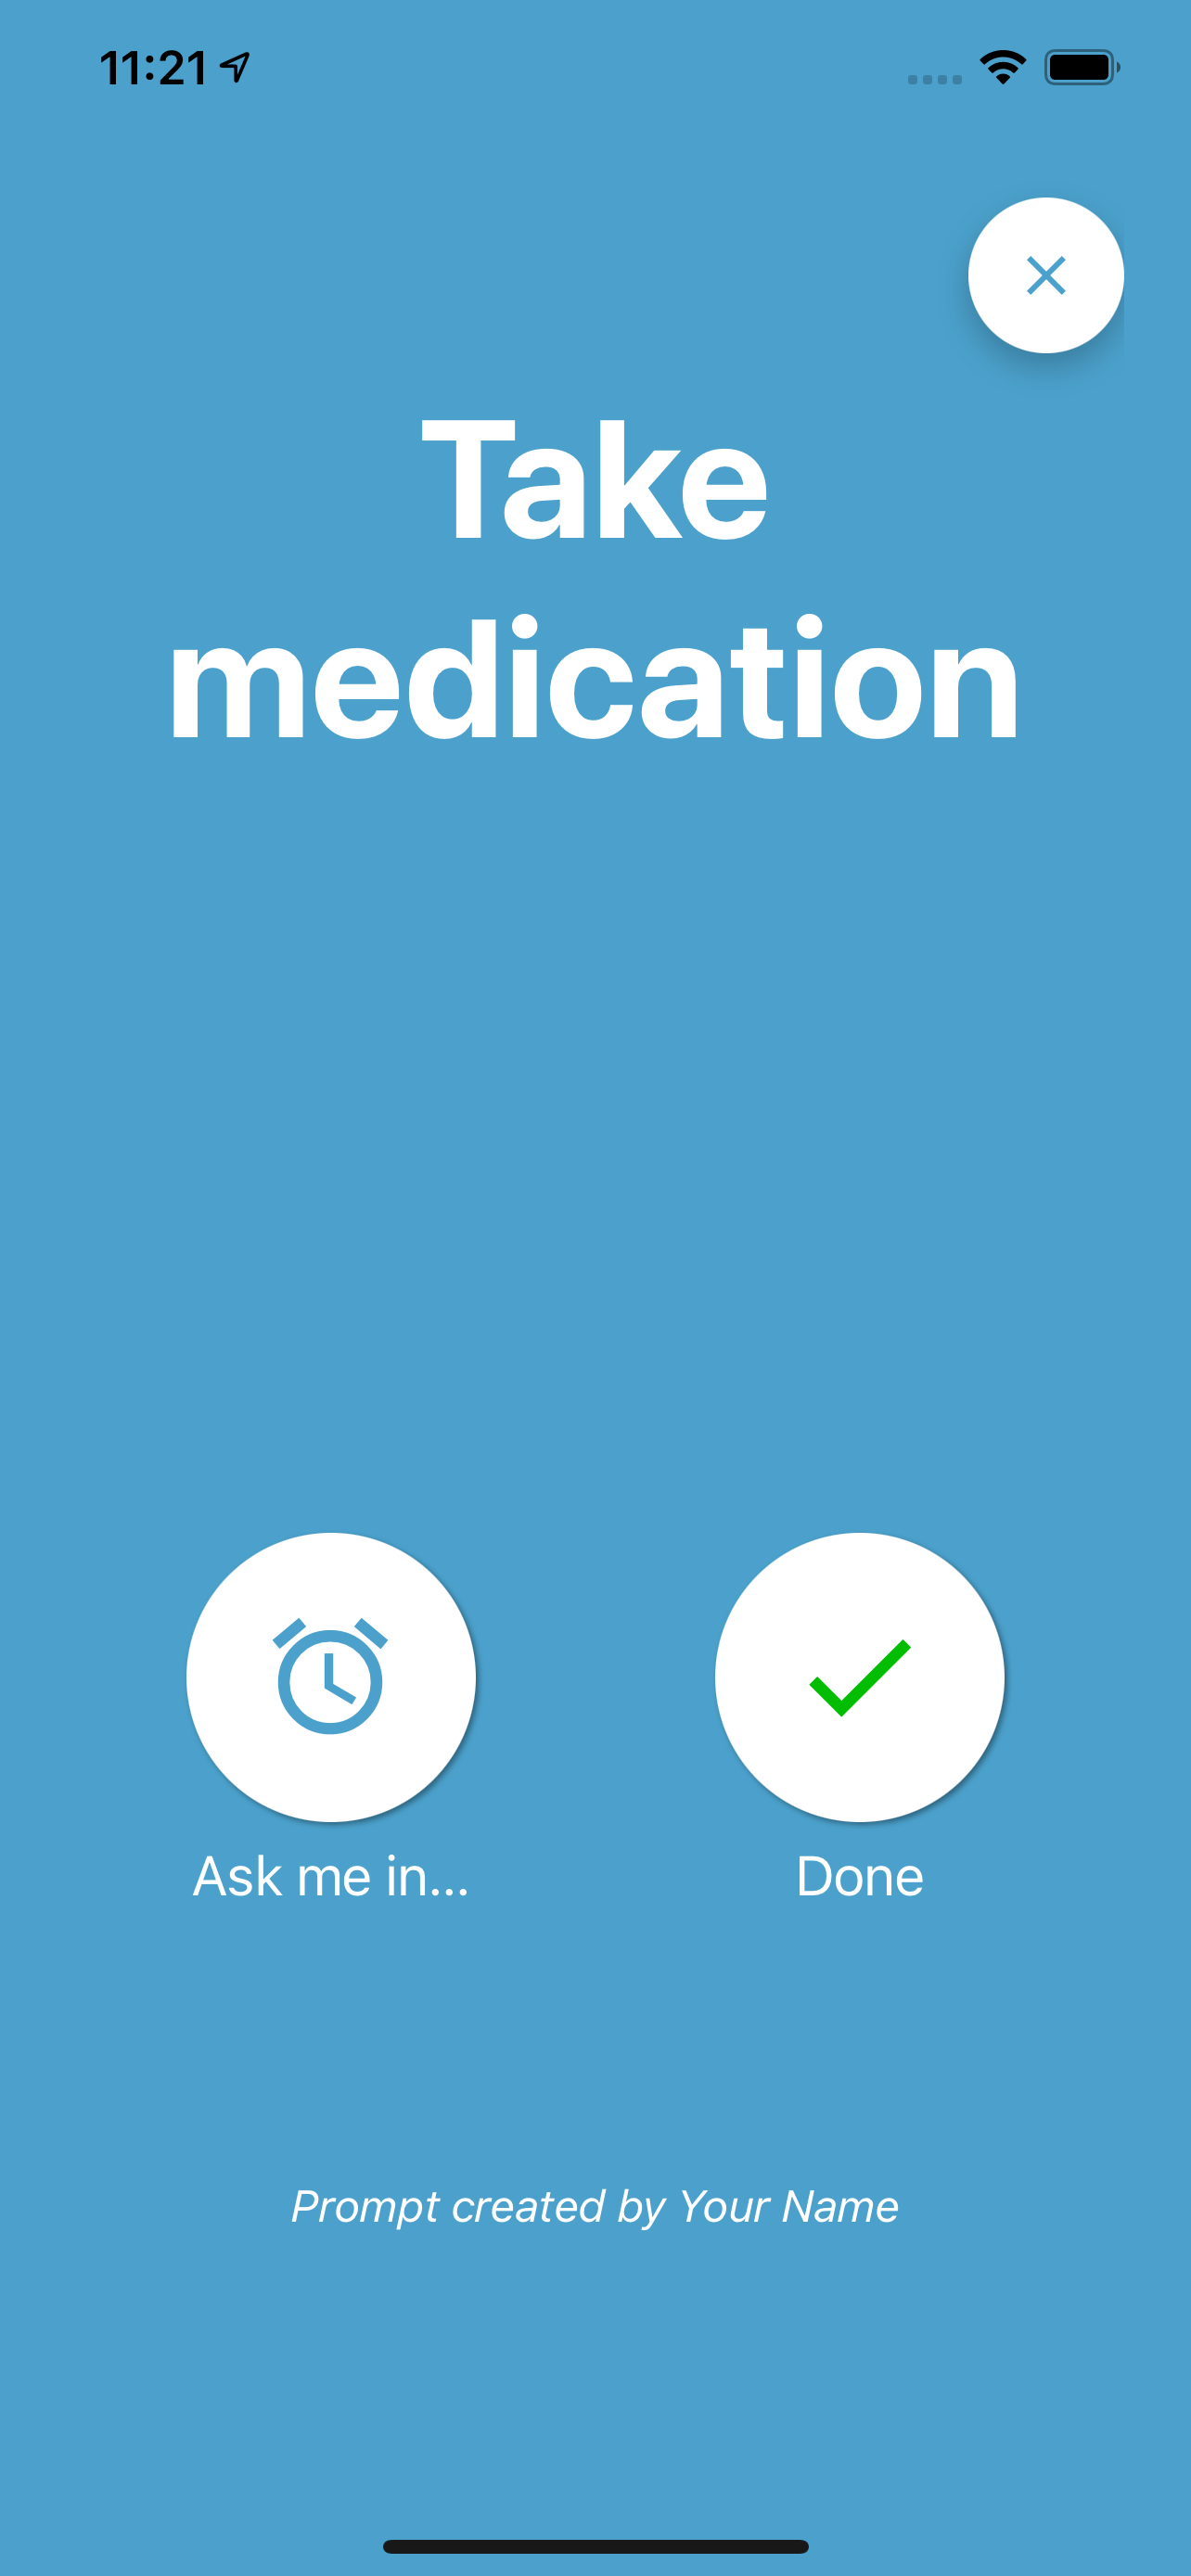 App screenshot showing a prompt alert